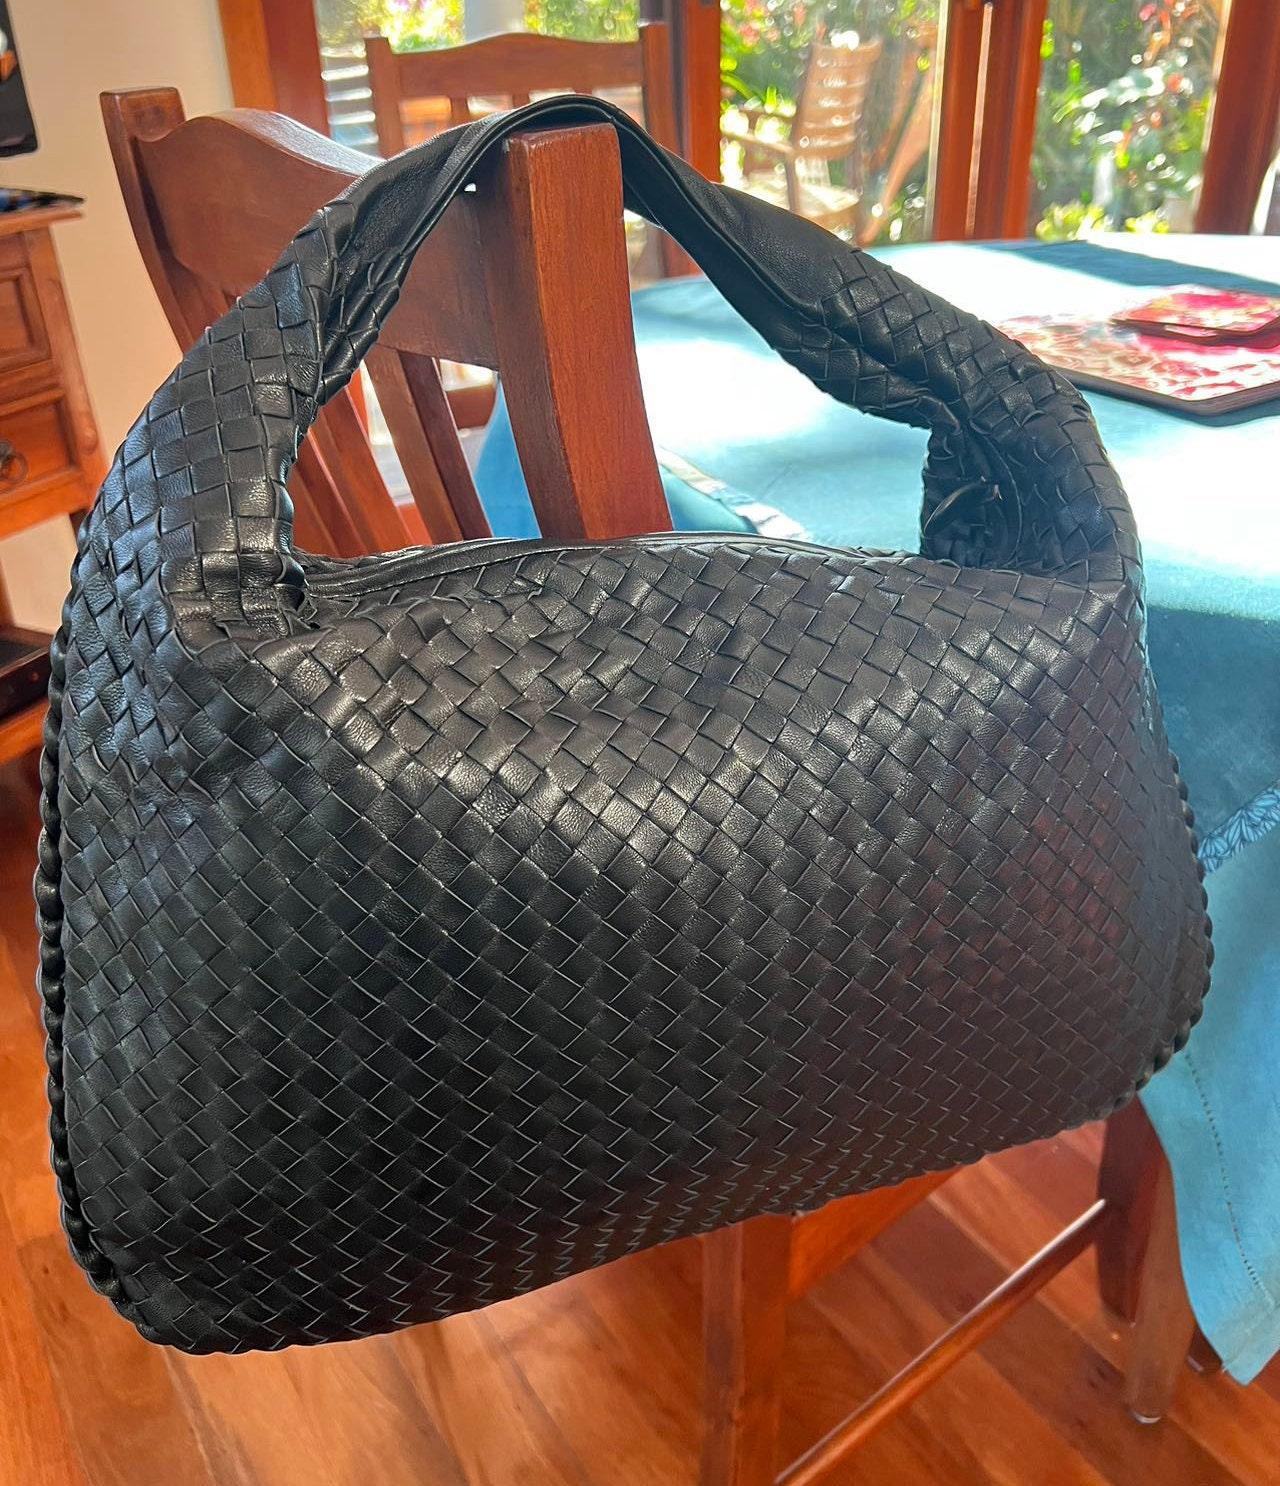 Lambskin Hobo Bag, Italian Leather Handbag, Large Handwoven Laptop Bag, Woven Dumpling Bag,  Leather Tote Bag, Black, Blue Working Bag